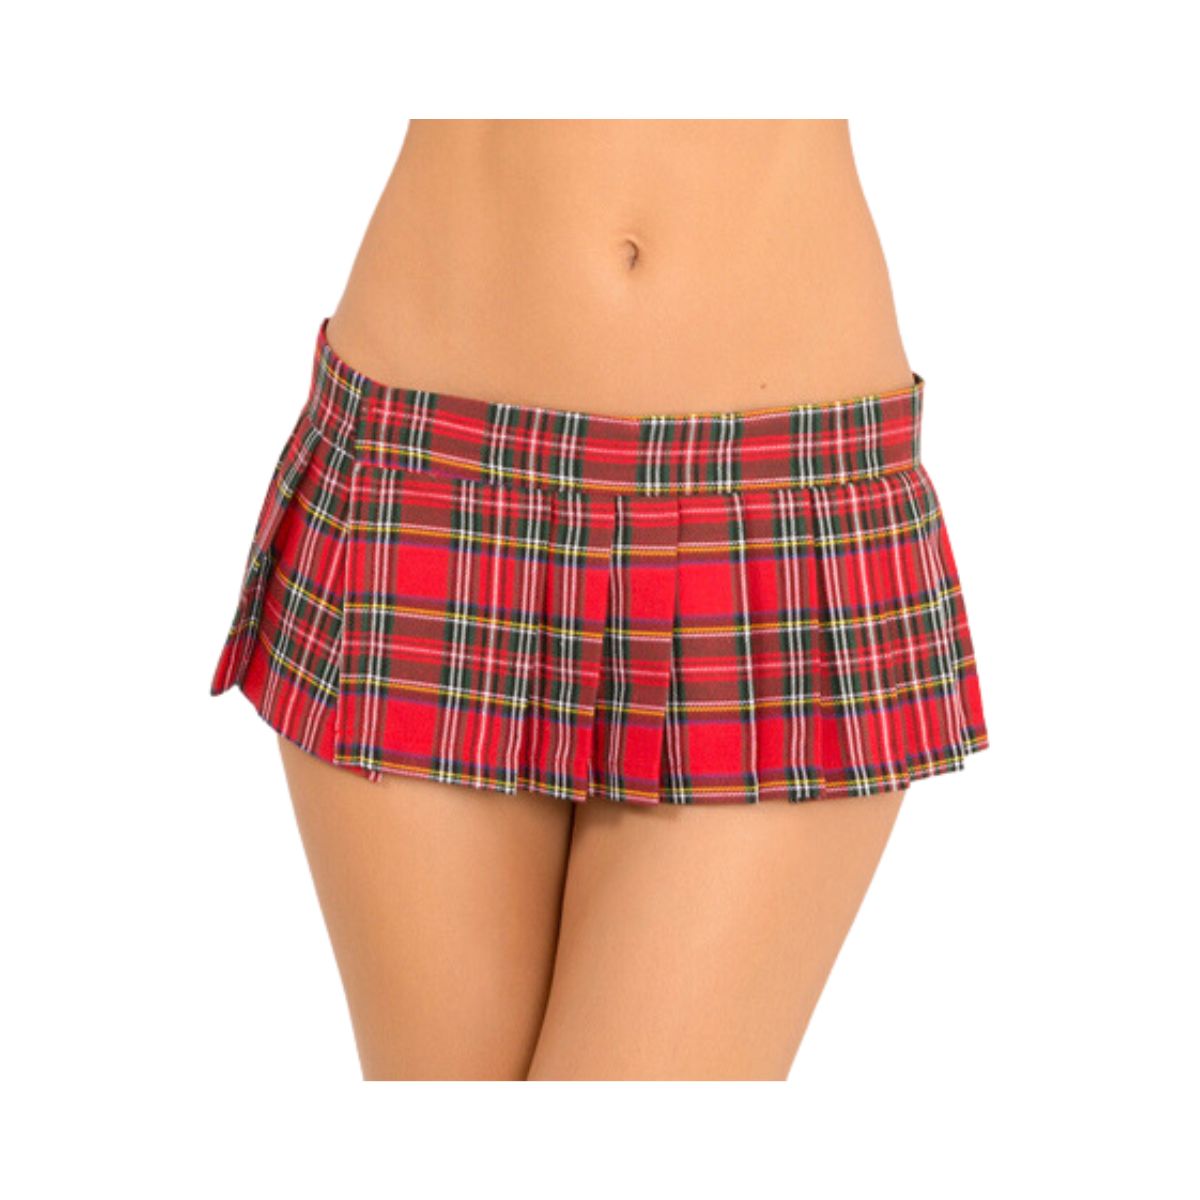 Reform School Velcro Plaid Mini Skirt - All Sizes